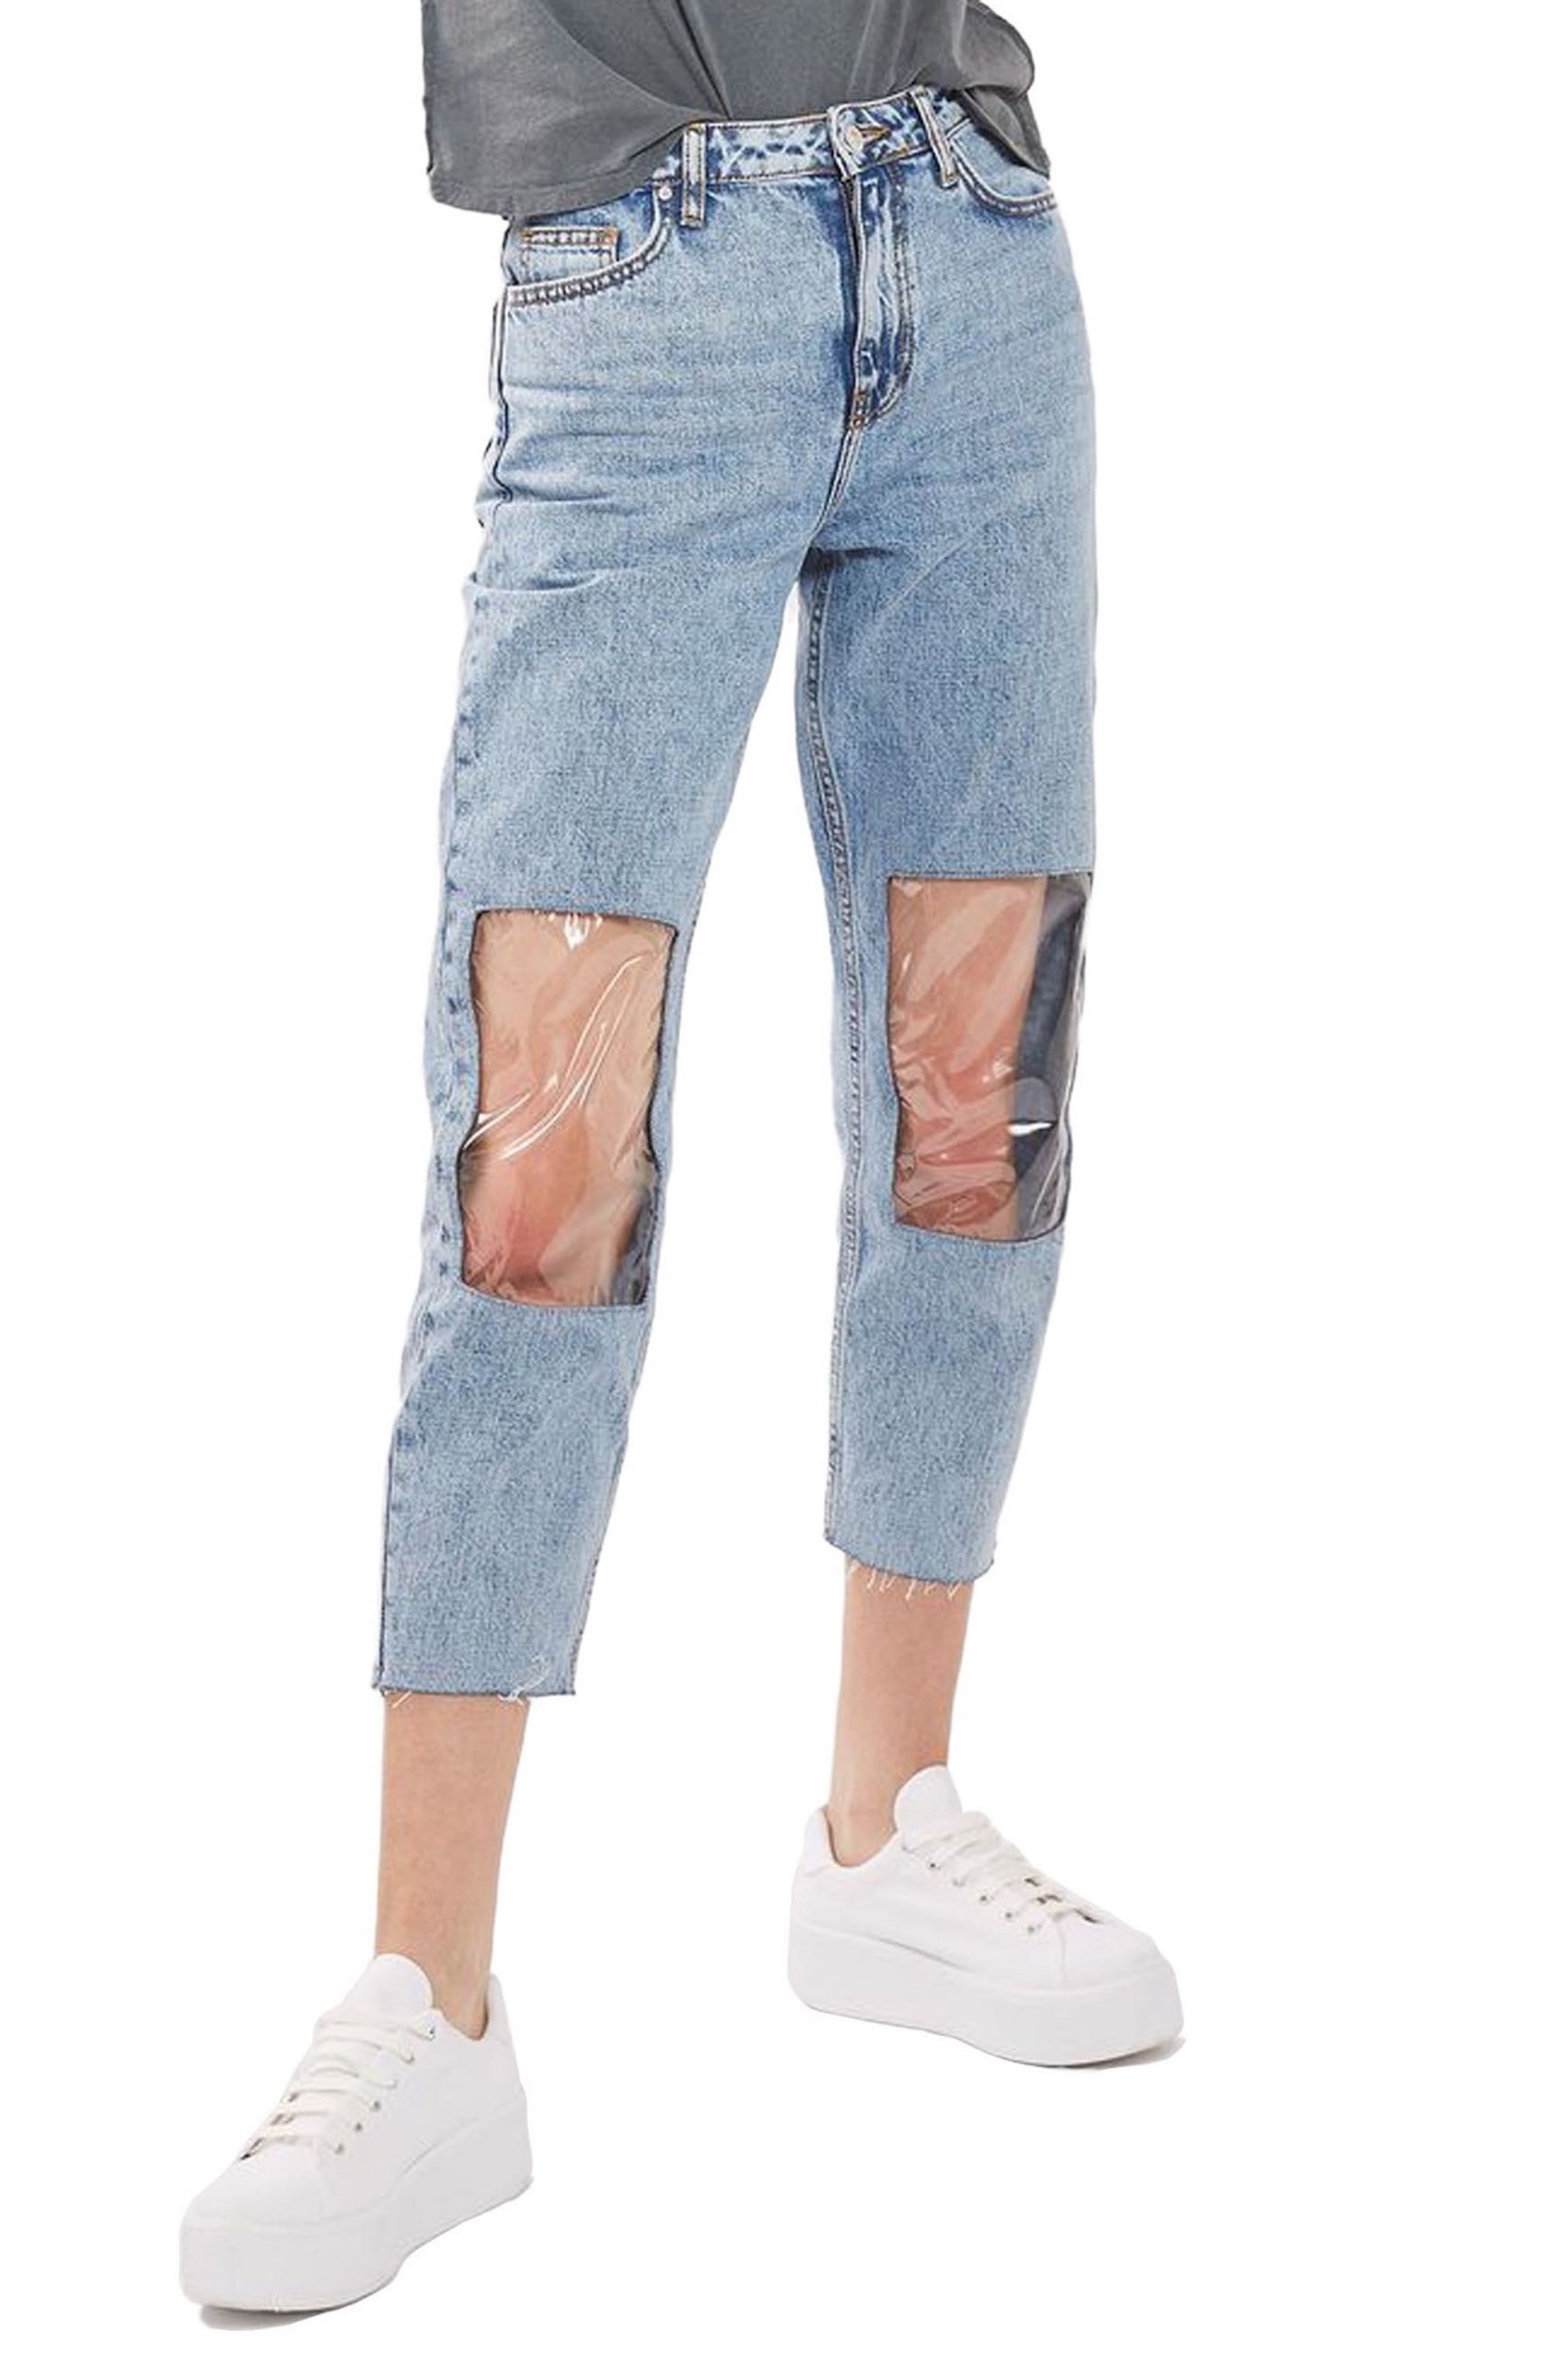 Topshop Clear Knee Mom Jeans Popsugar Fashion 